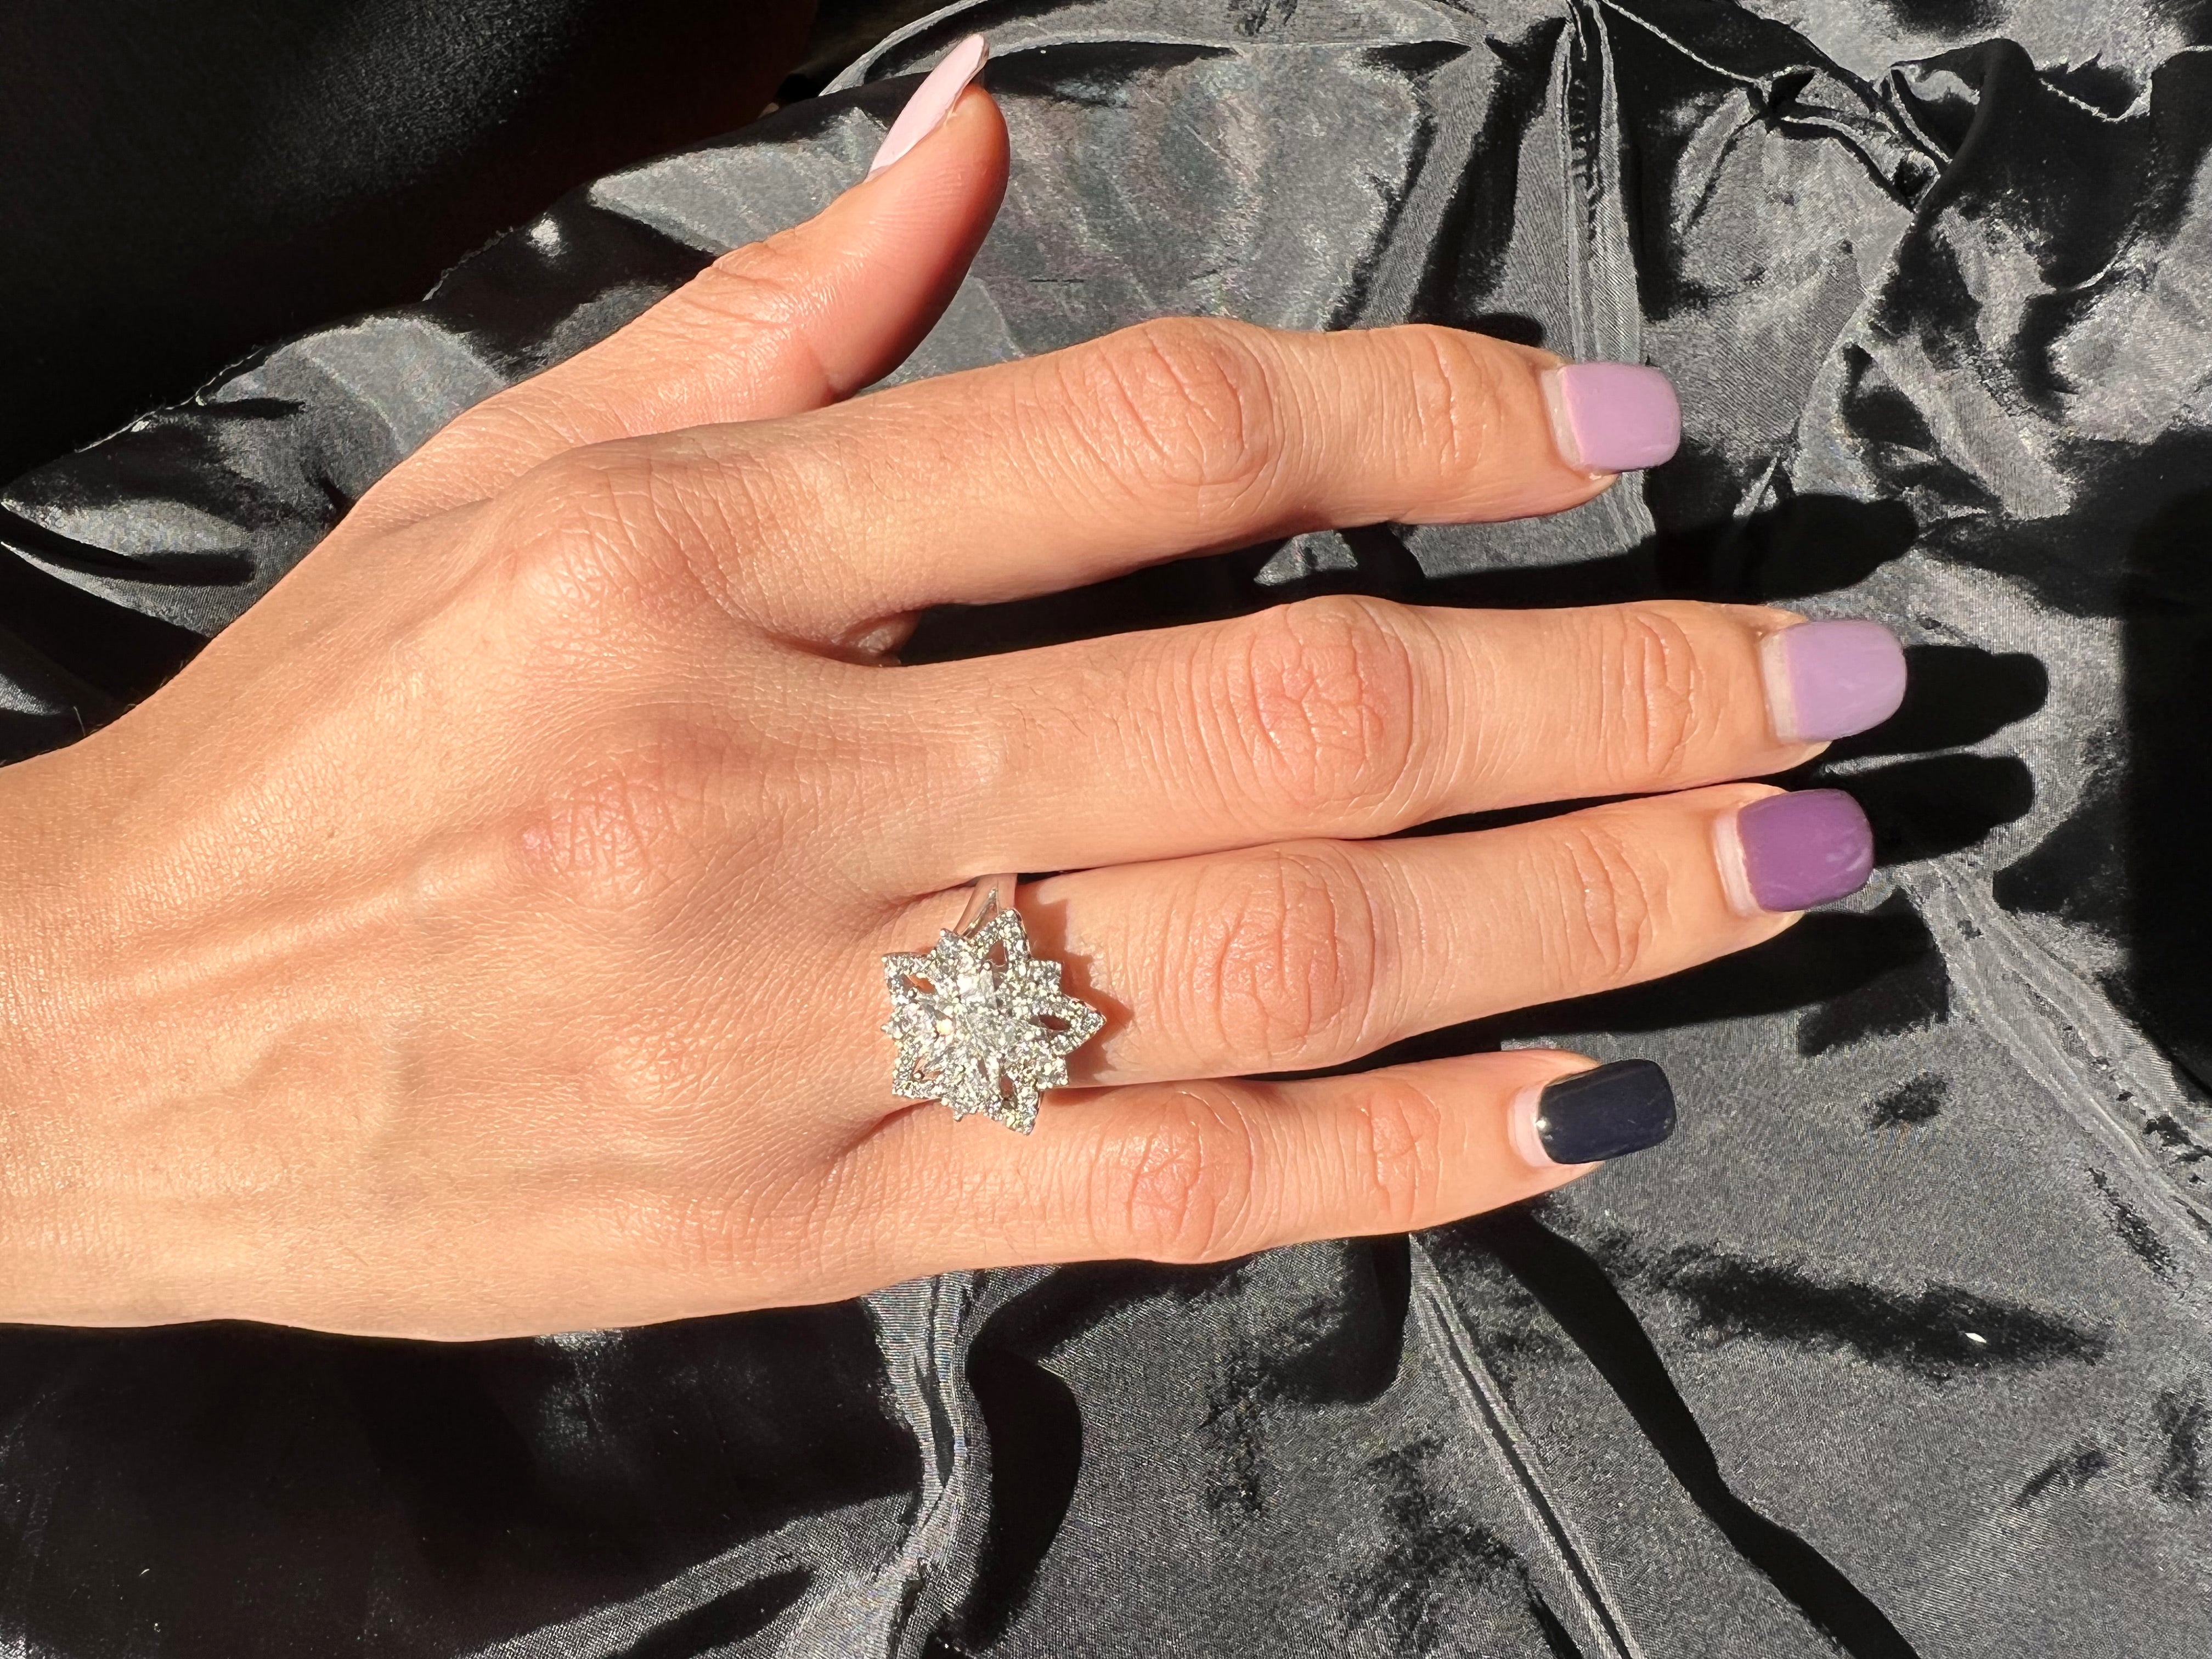 Round & Star Illusion Cut Flower Halo Cluster Diamond Gold Engagement Wedding Ring